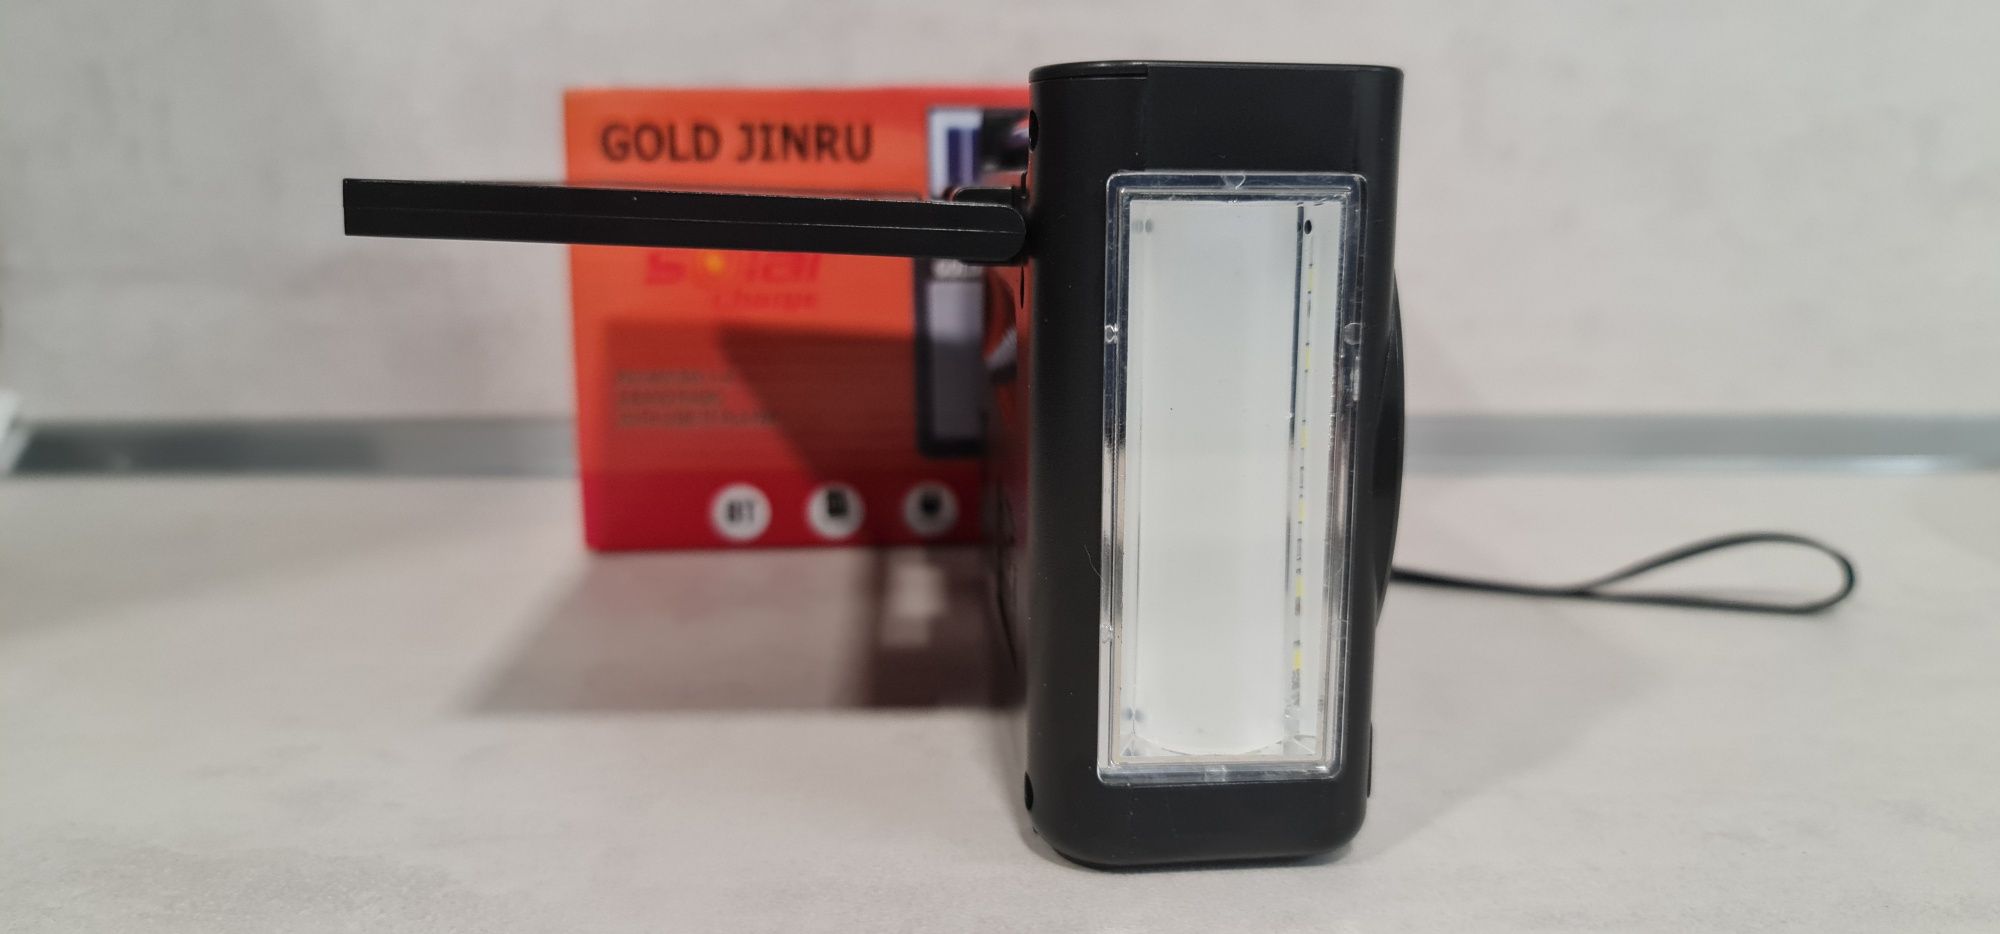 Соларно Радио с фенер,Bluetooth,USB,SD+LED Фенер JR-097 BTS